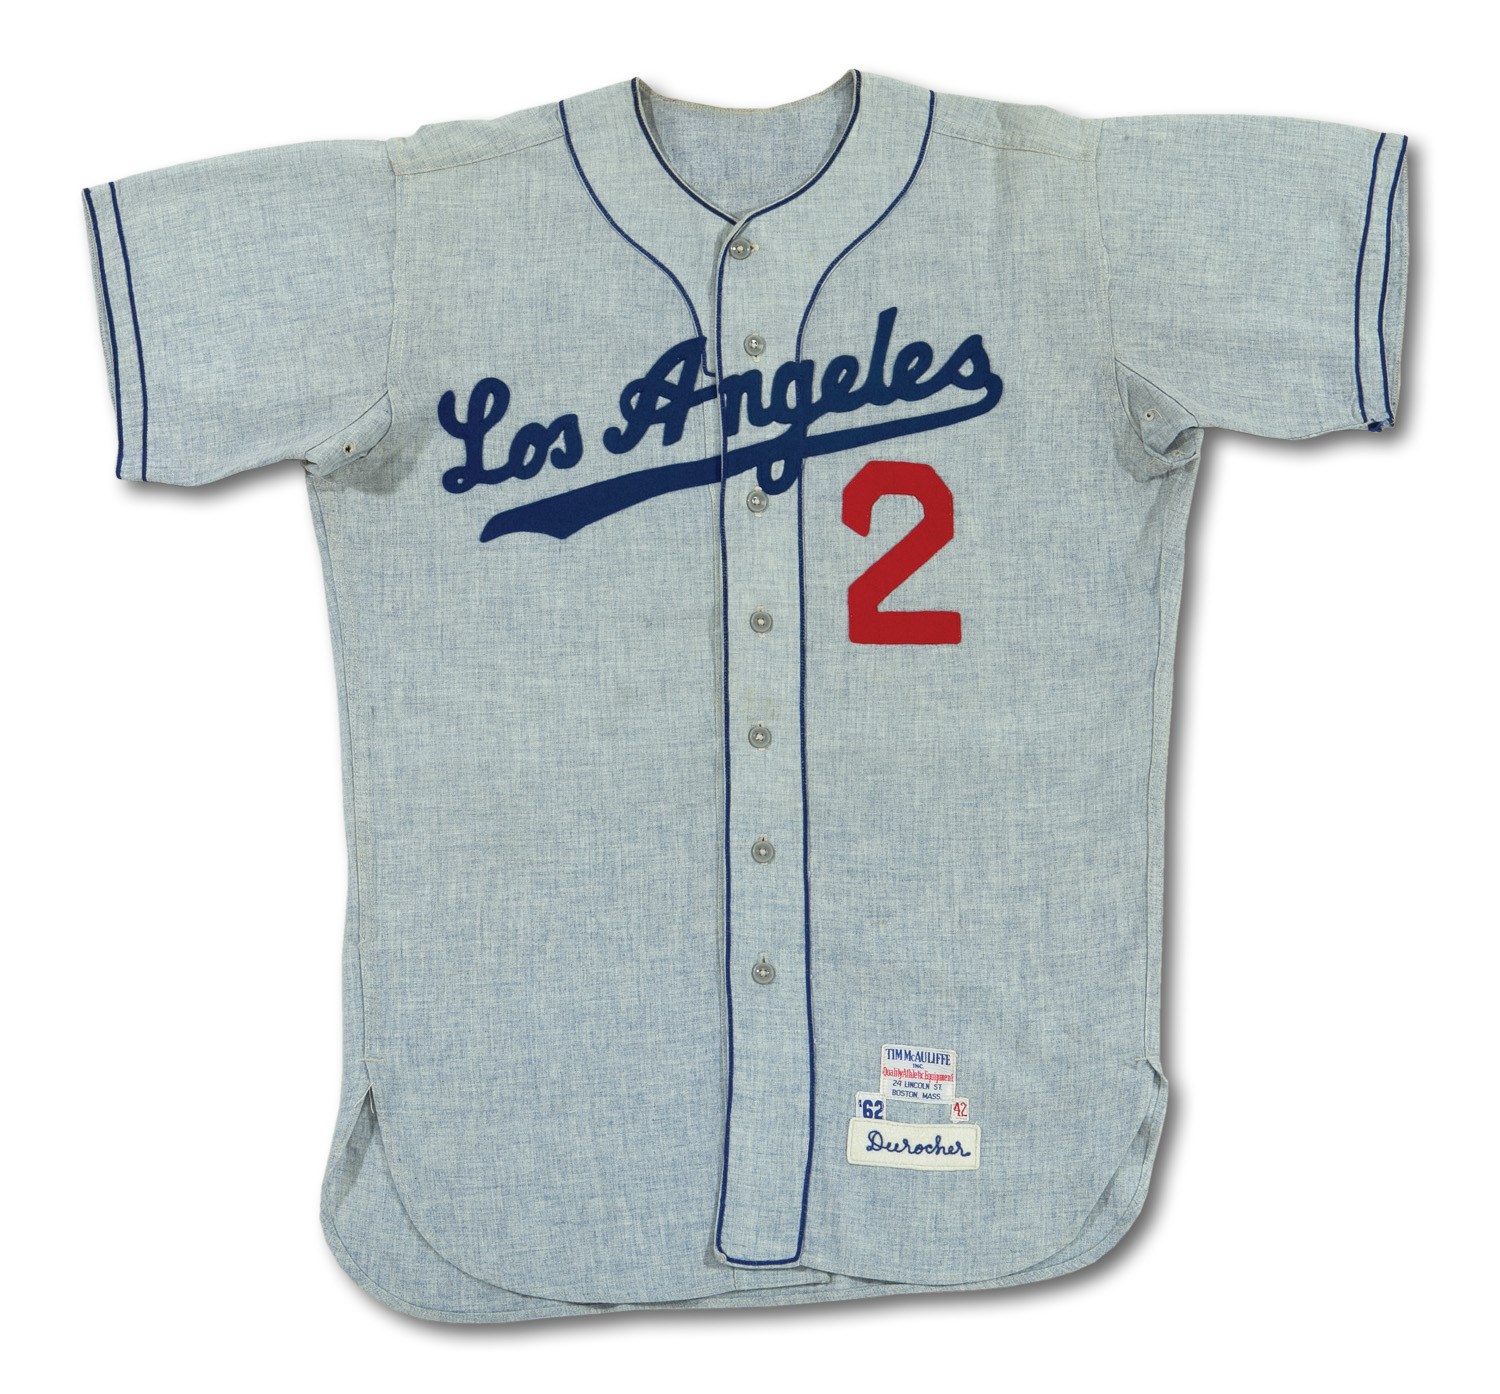 Los Angeles Dodgers Uniform Numbers